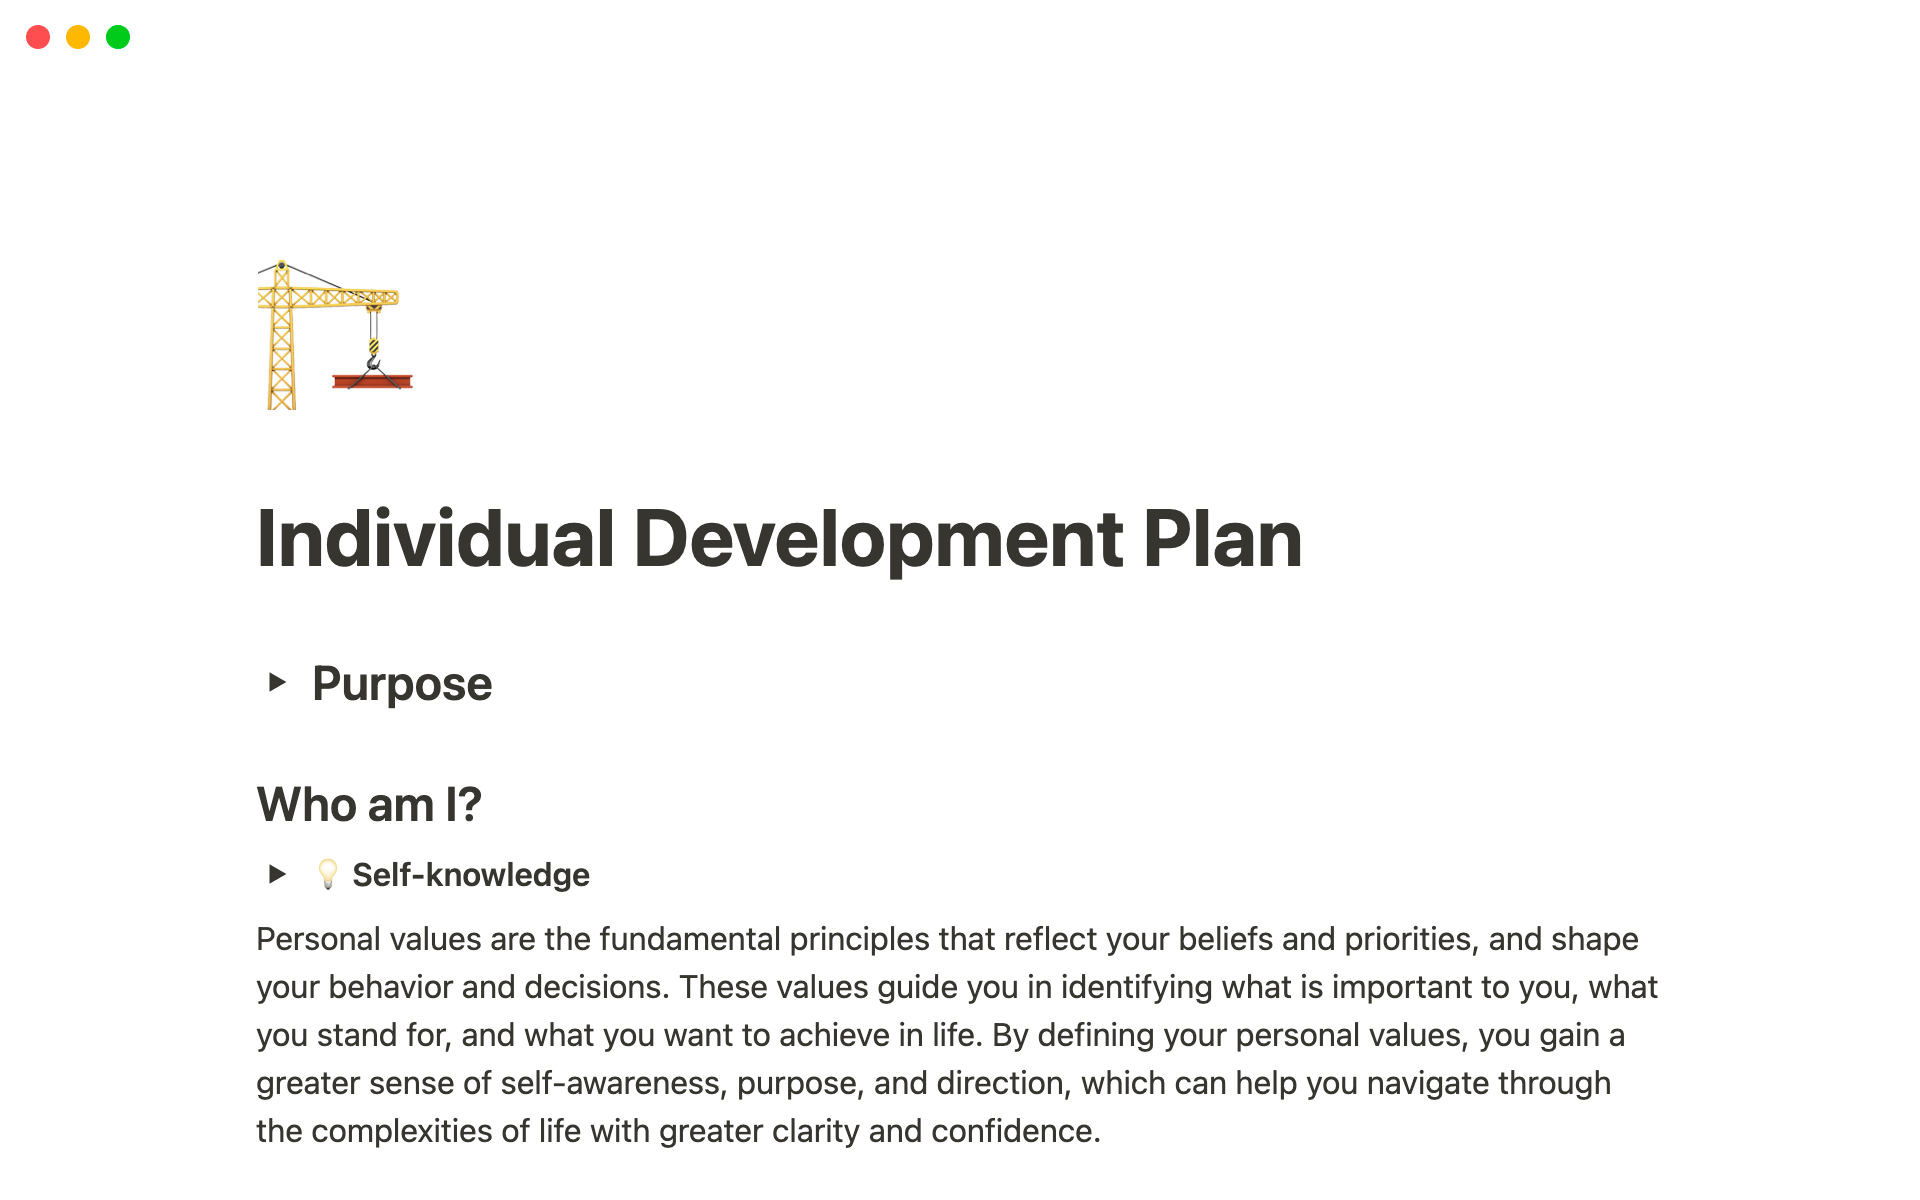 Individual development plan template